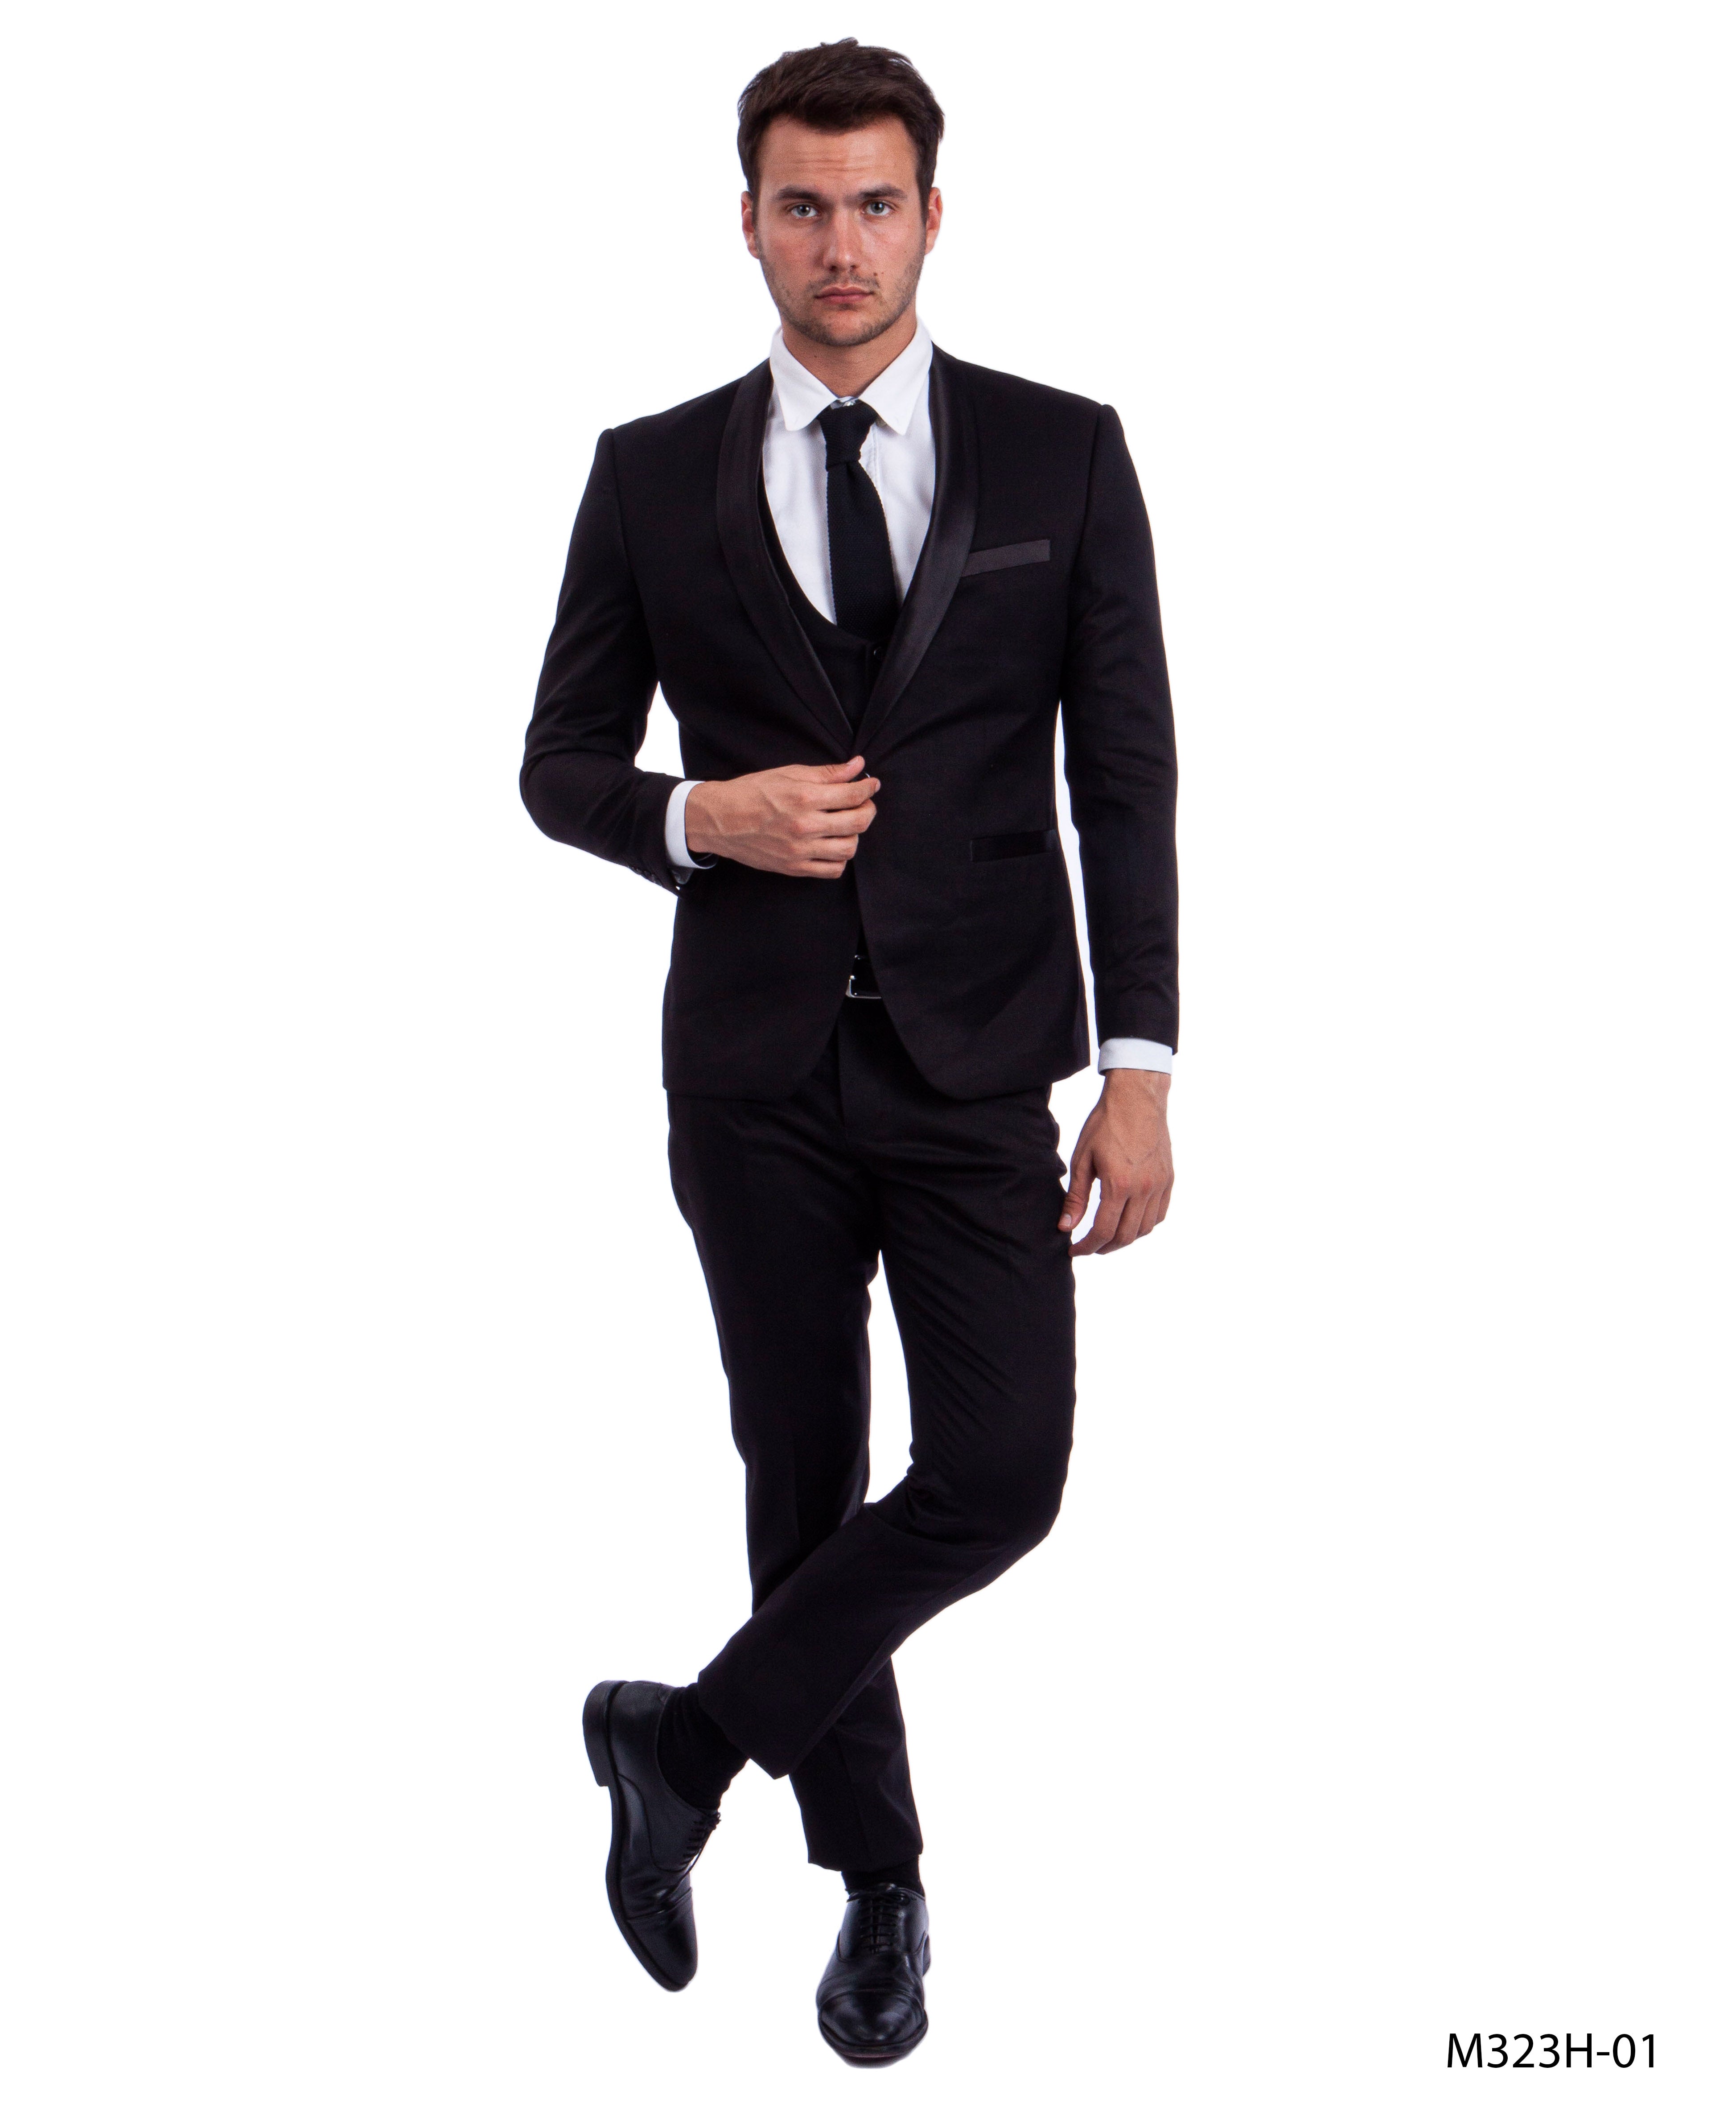 Black/Black Suit For Men Formal Suits For All Ocassions